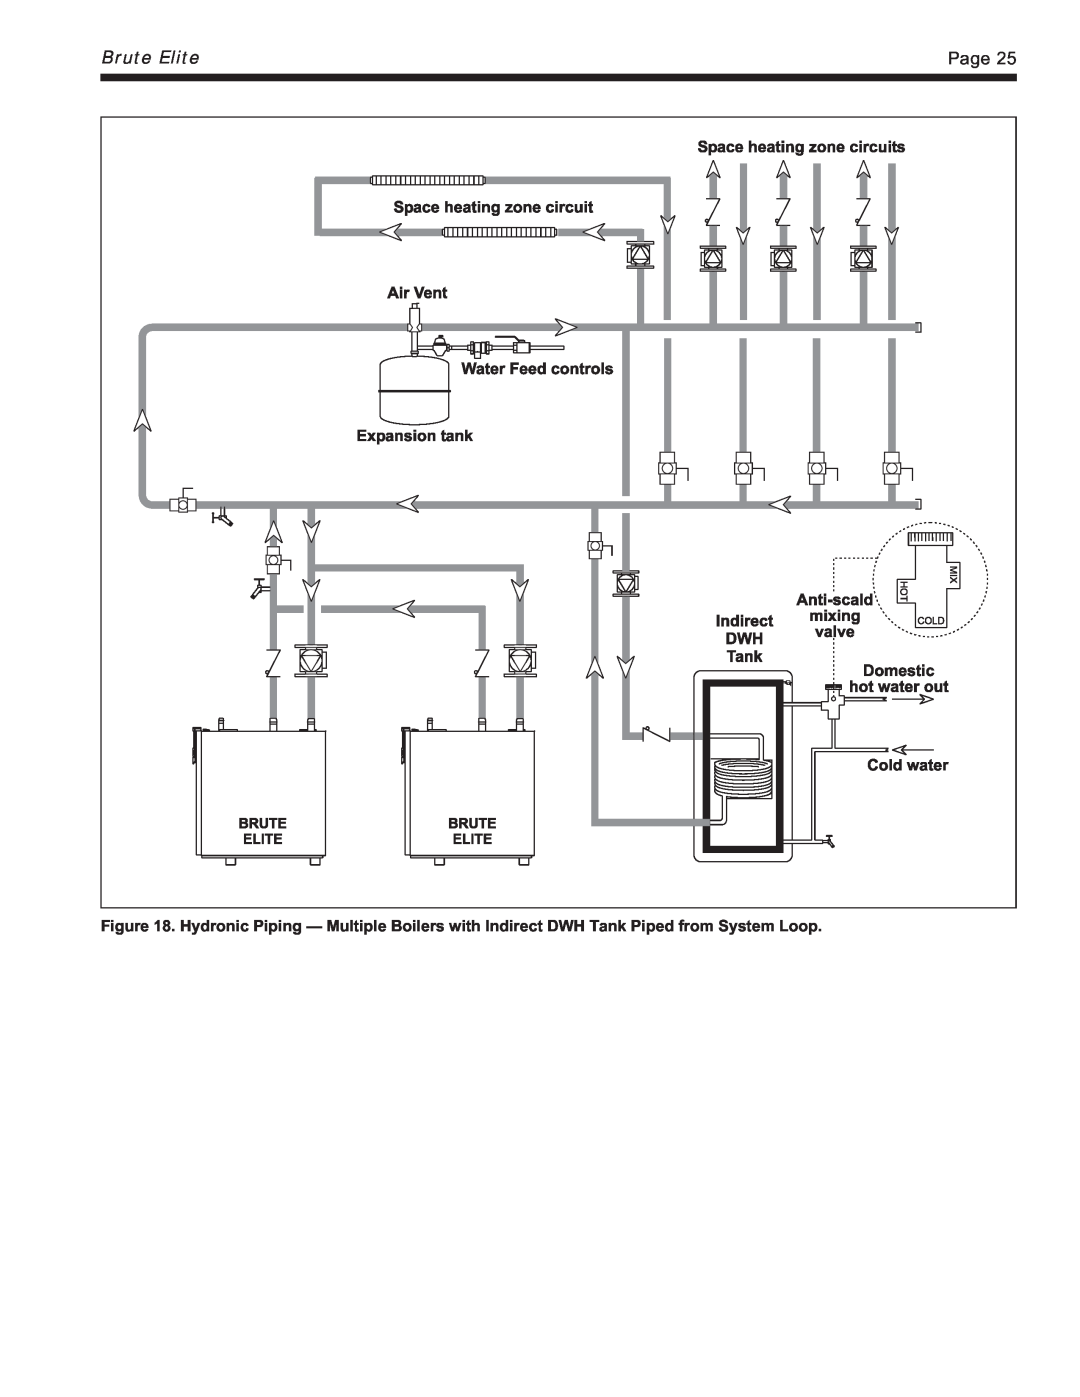 Bradford-White Corp BNTV, BNTH, Modulating Boiler warranty Brute Elite, Page 